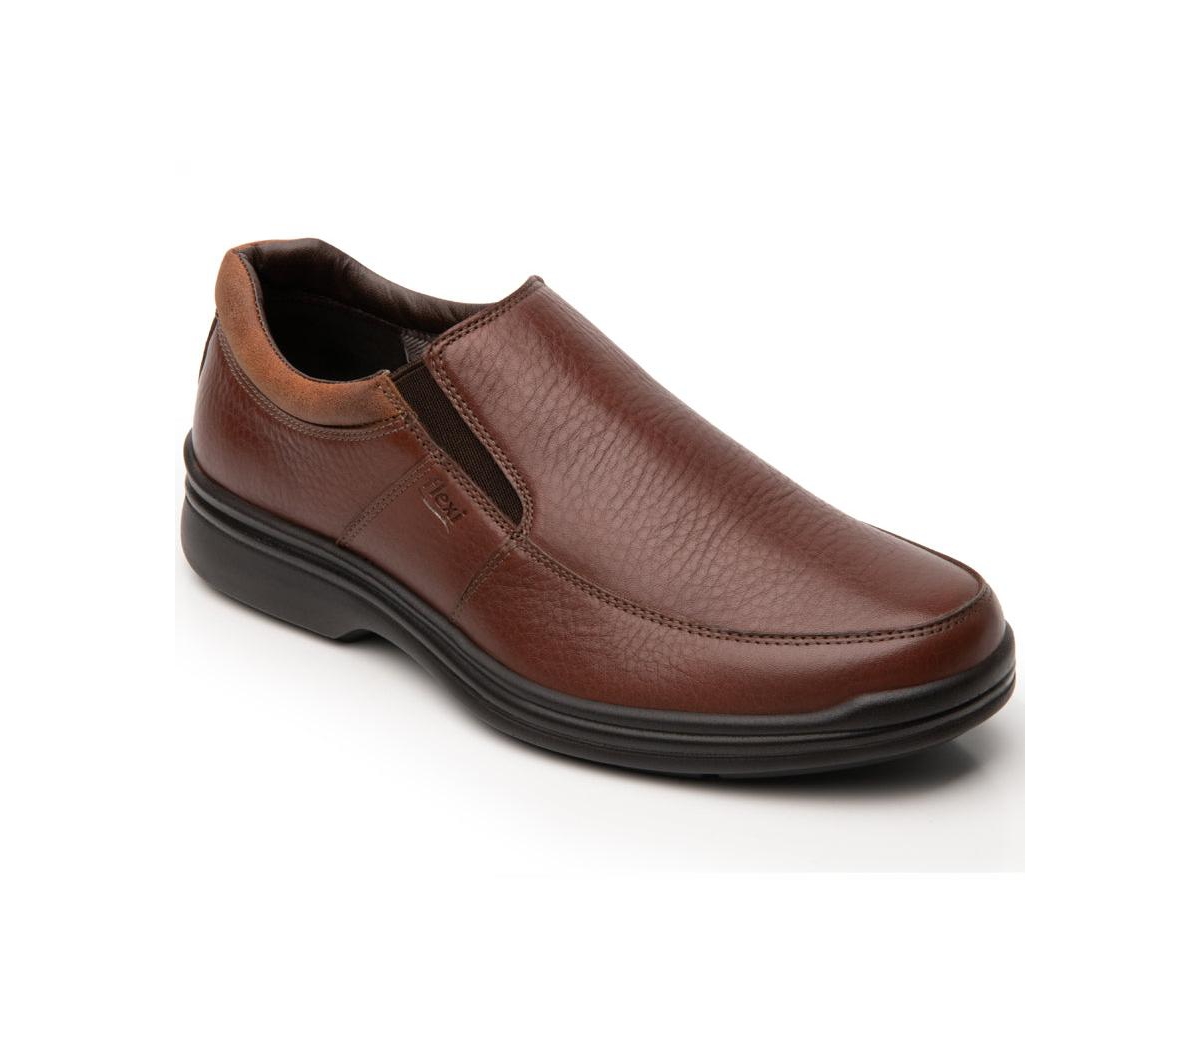 Men's Leather Moccasins By Flexi Shoes, Tan 404802 - Tan